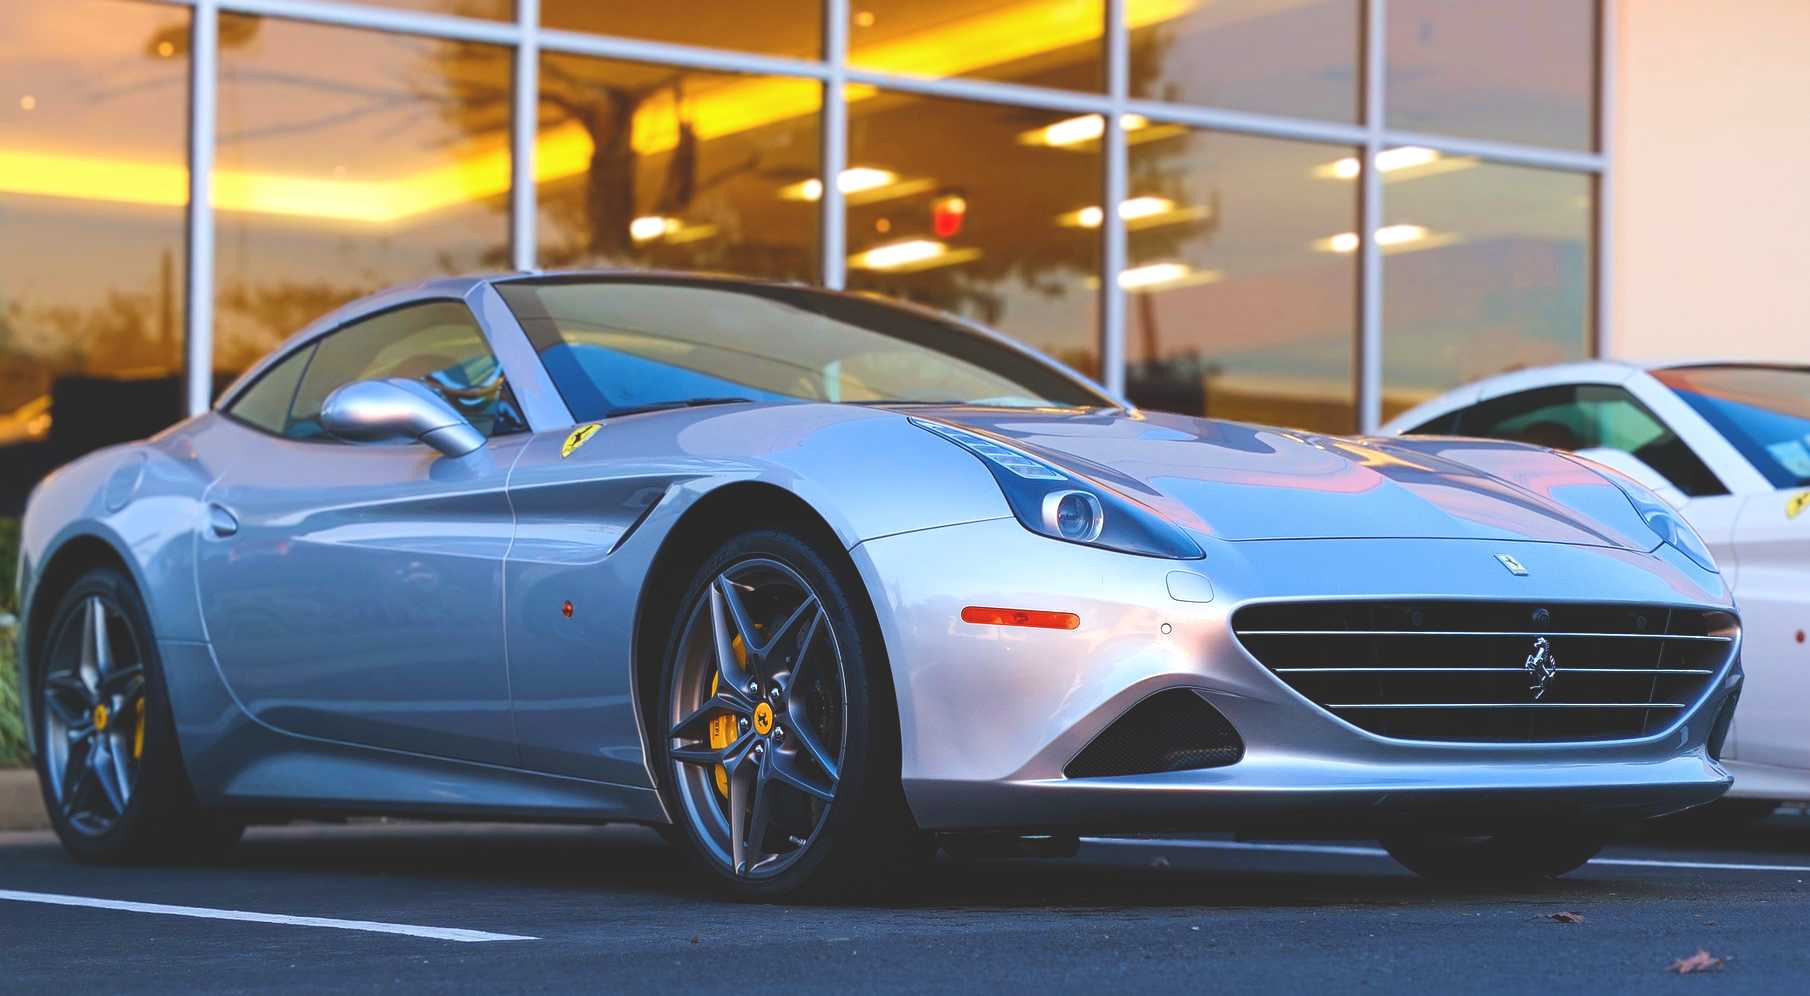 Gray Ferrari in Oakland, California | Goodwill Car Donations